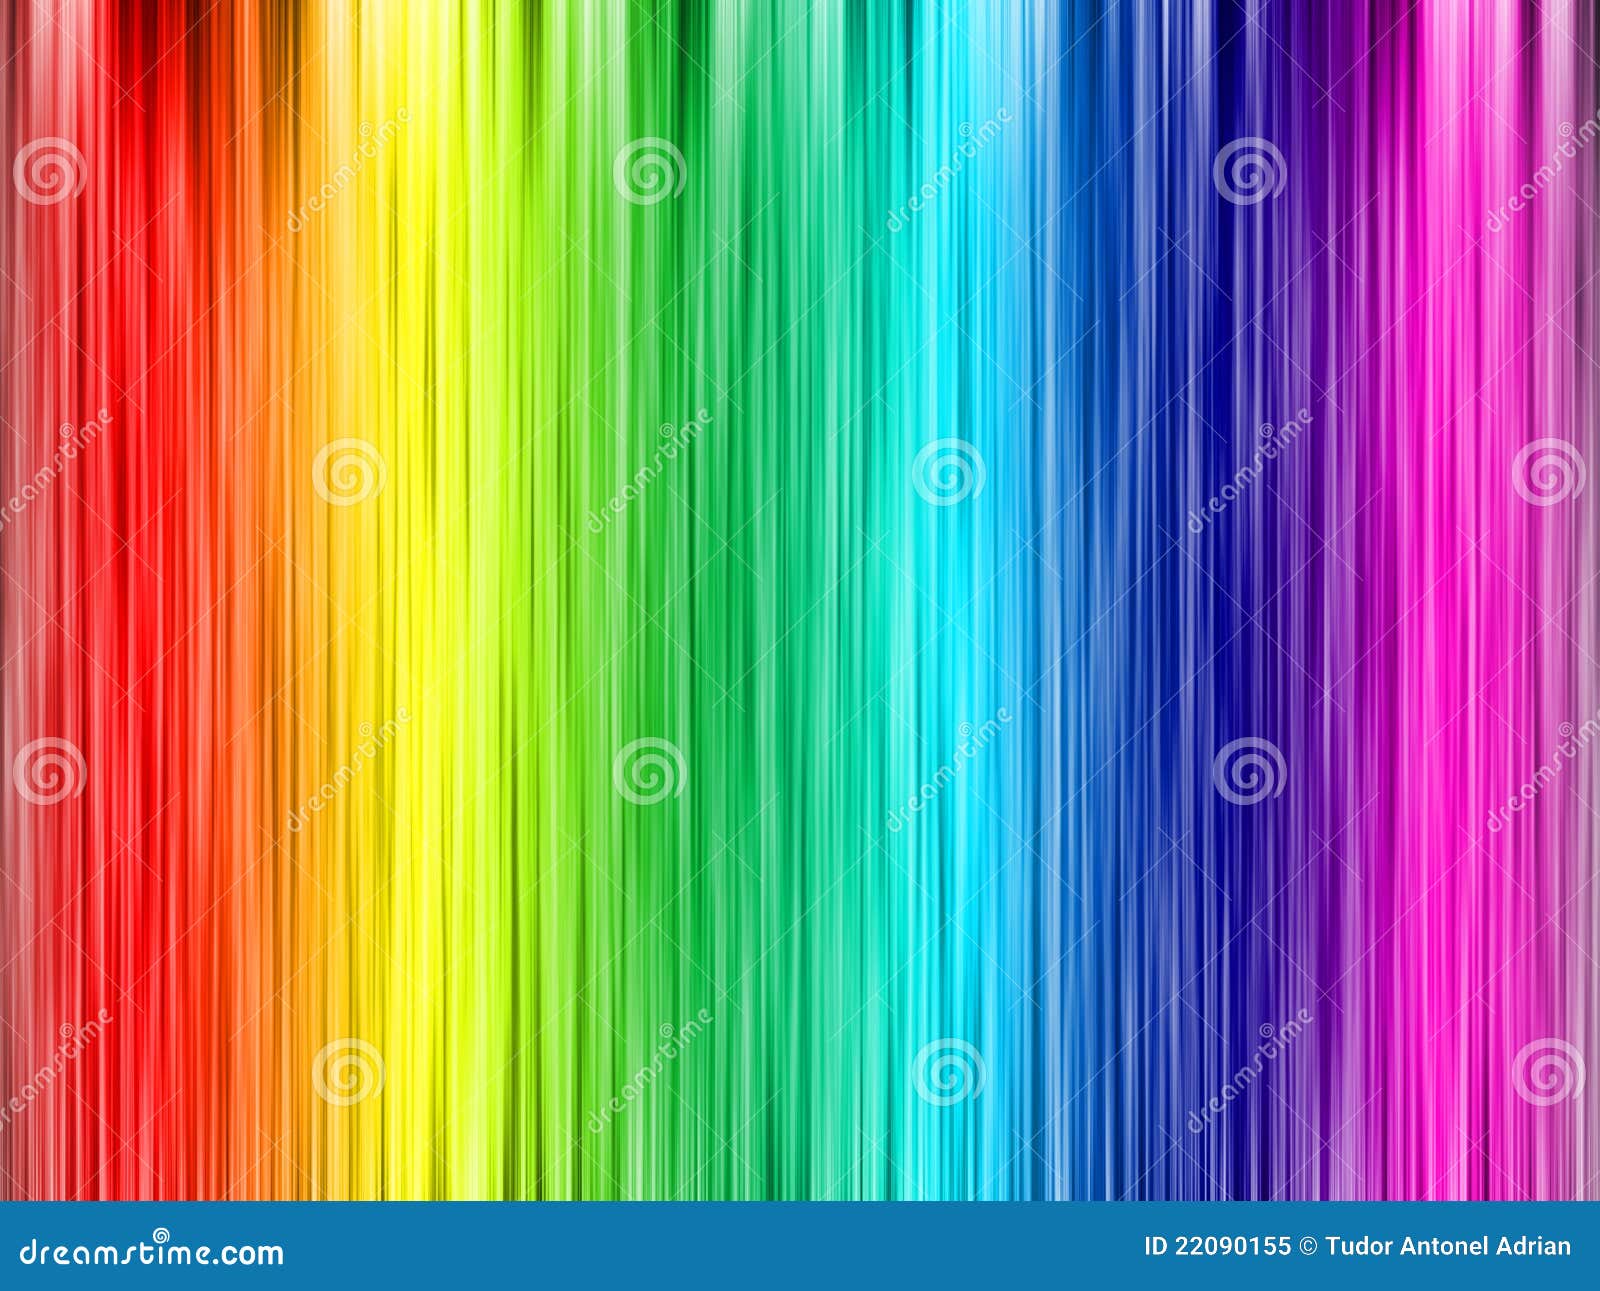 Rainbow background stock illustration. Illustration of computer - 22090155